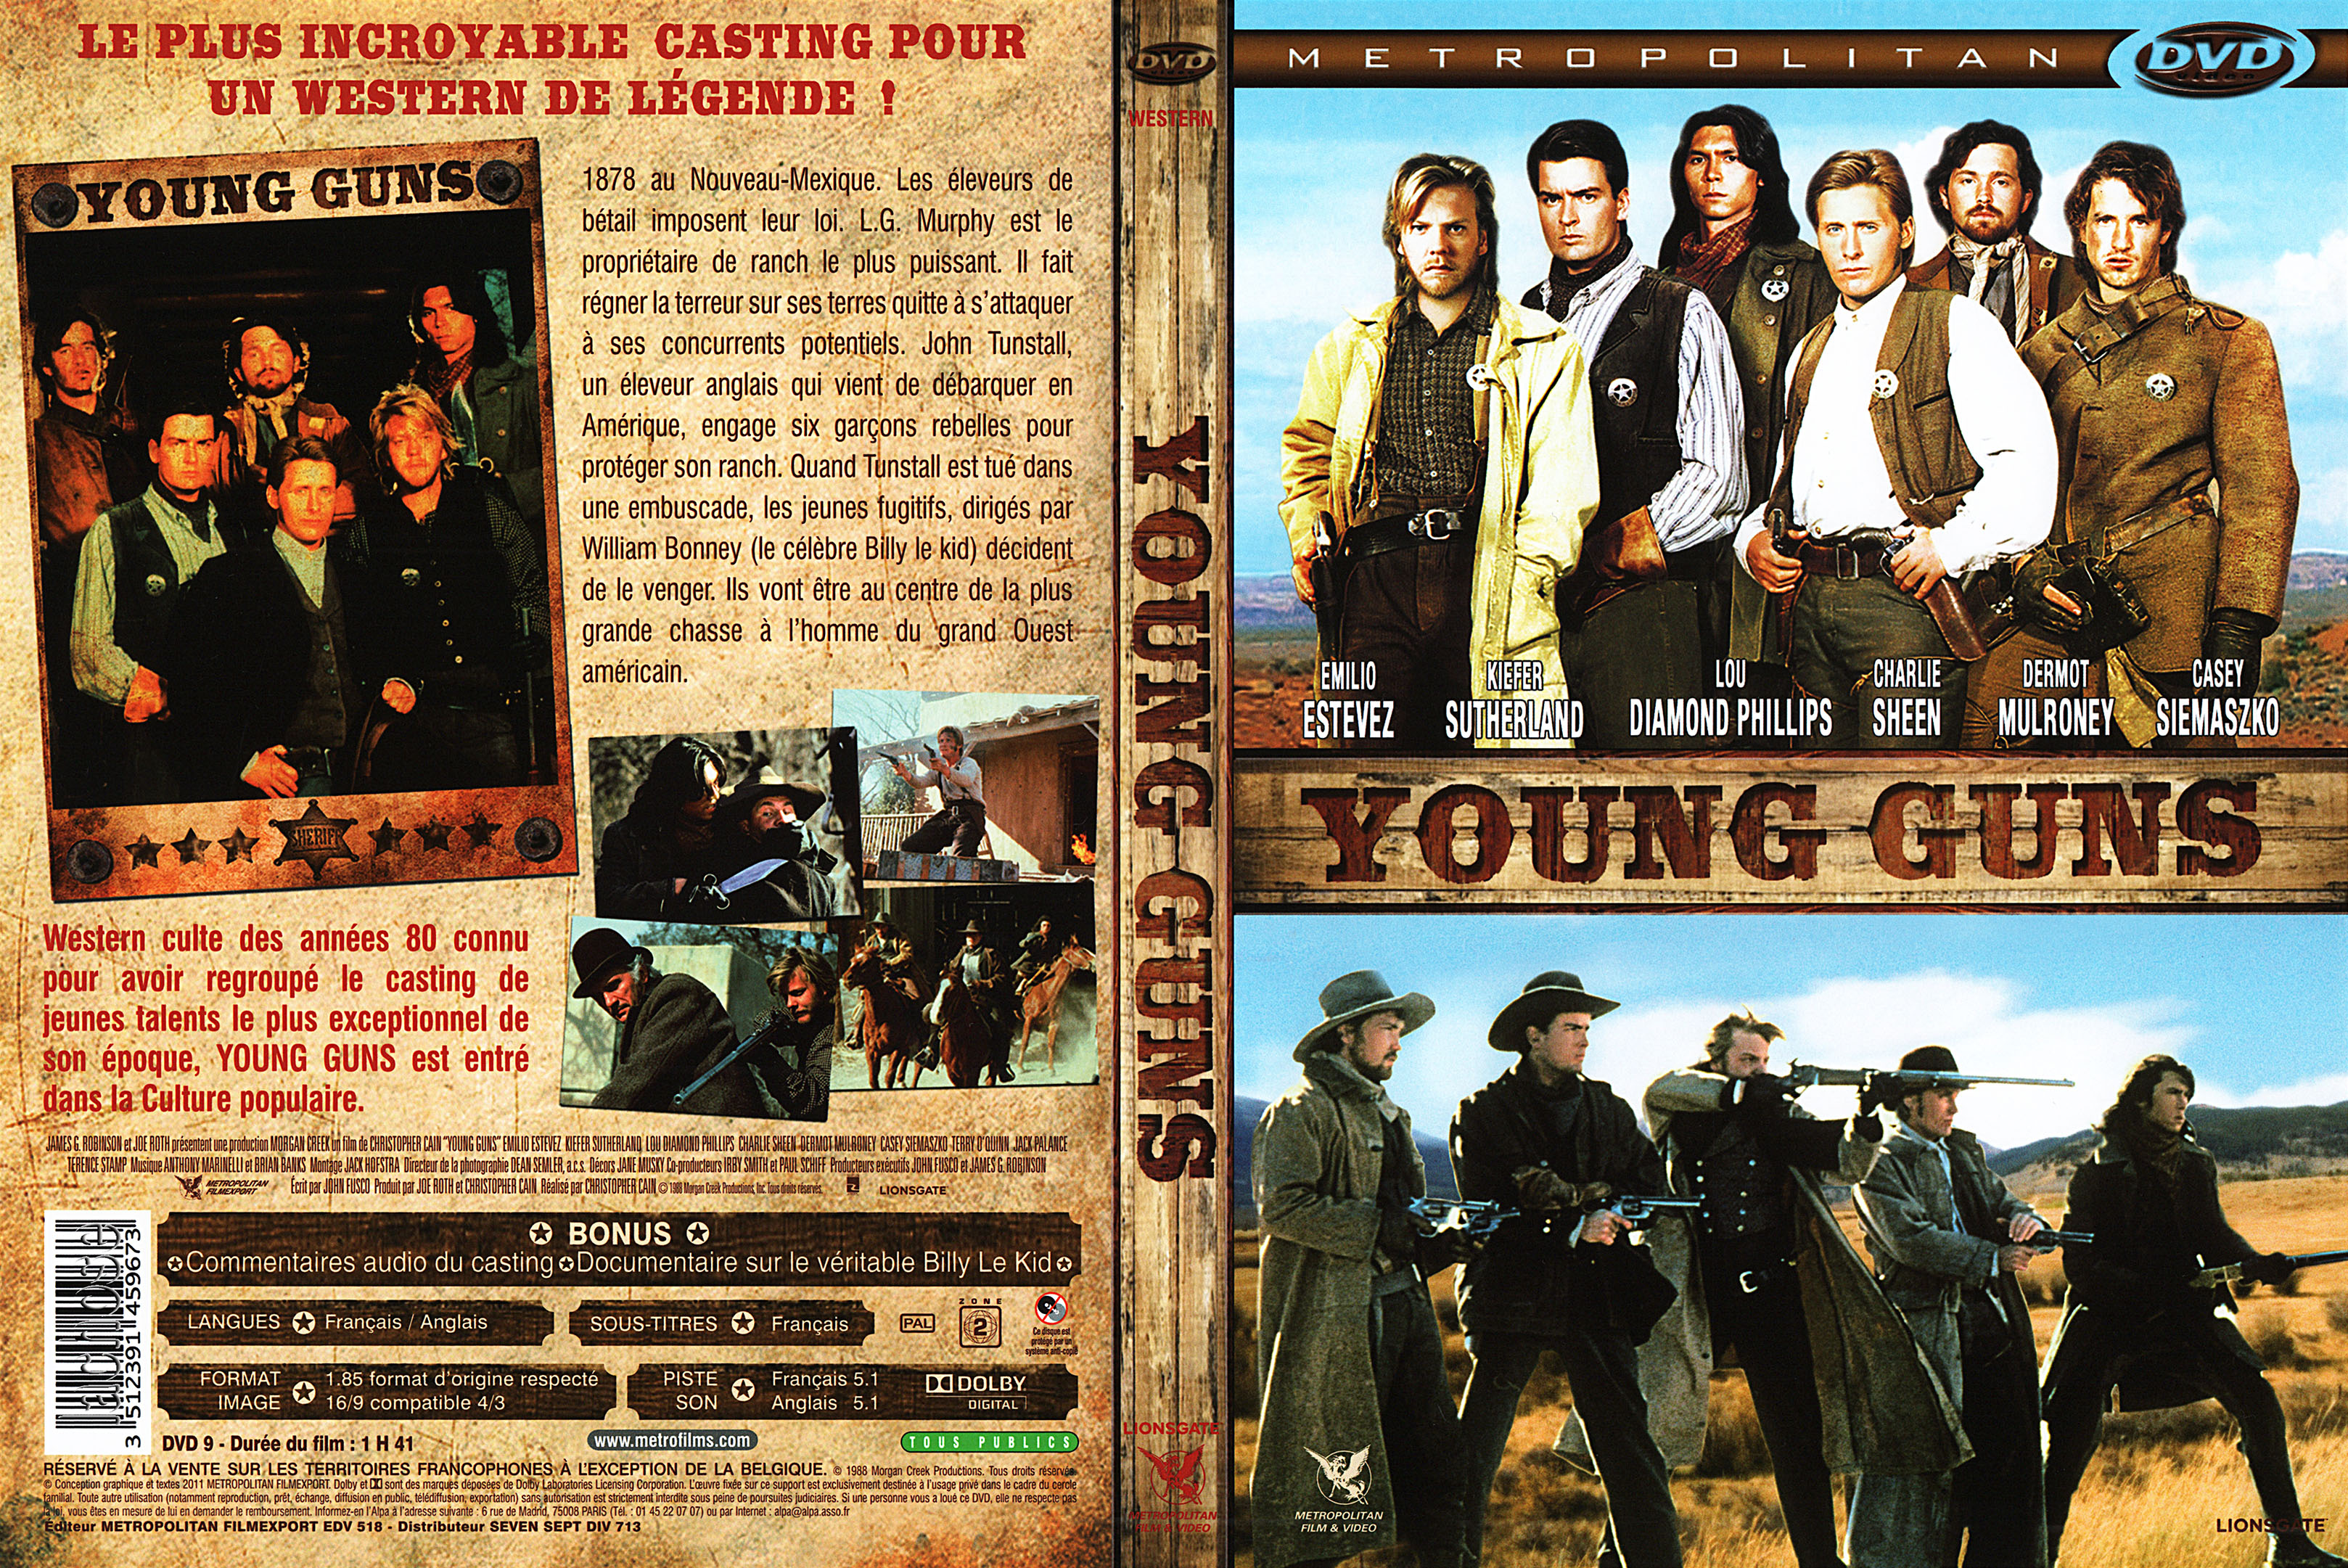 Jaquette DVD Young guns v2